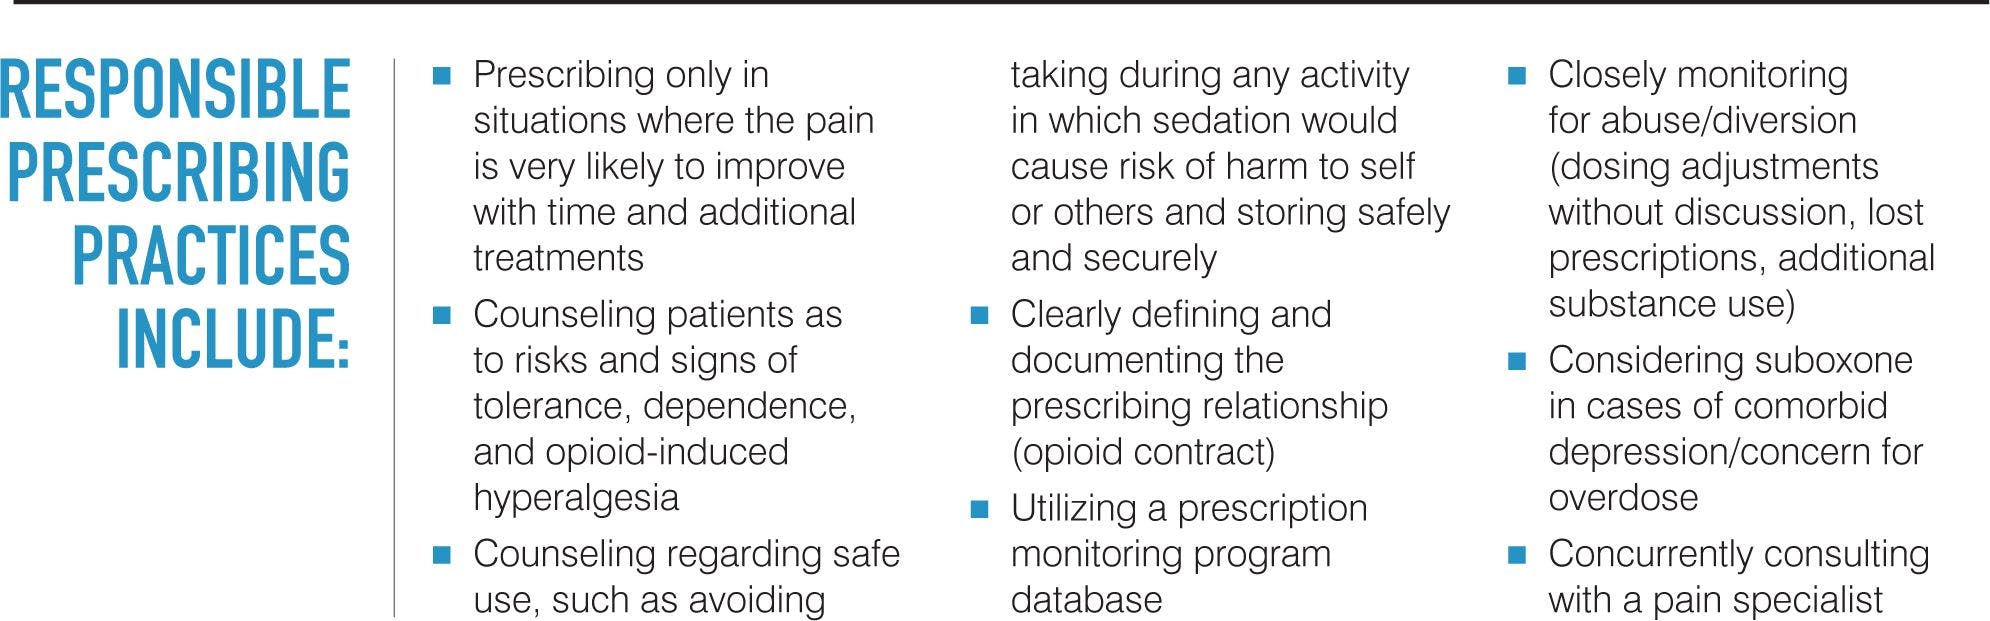 Responsible prescribing practices 